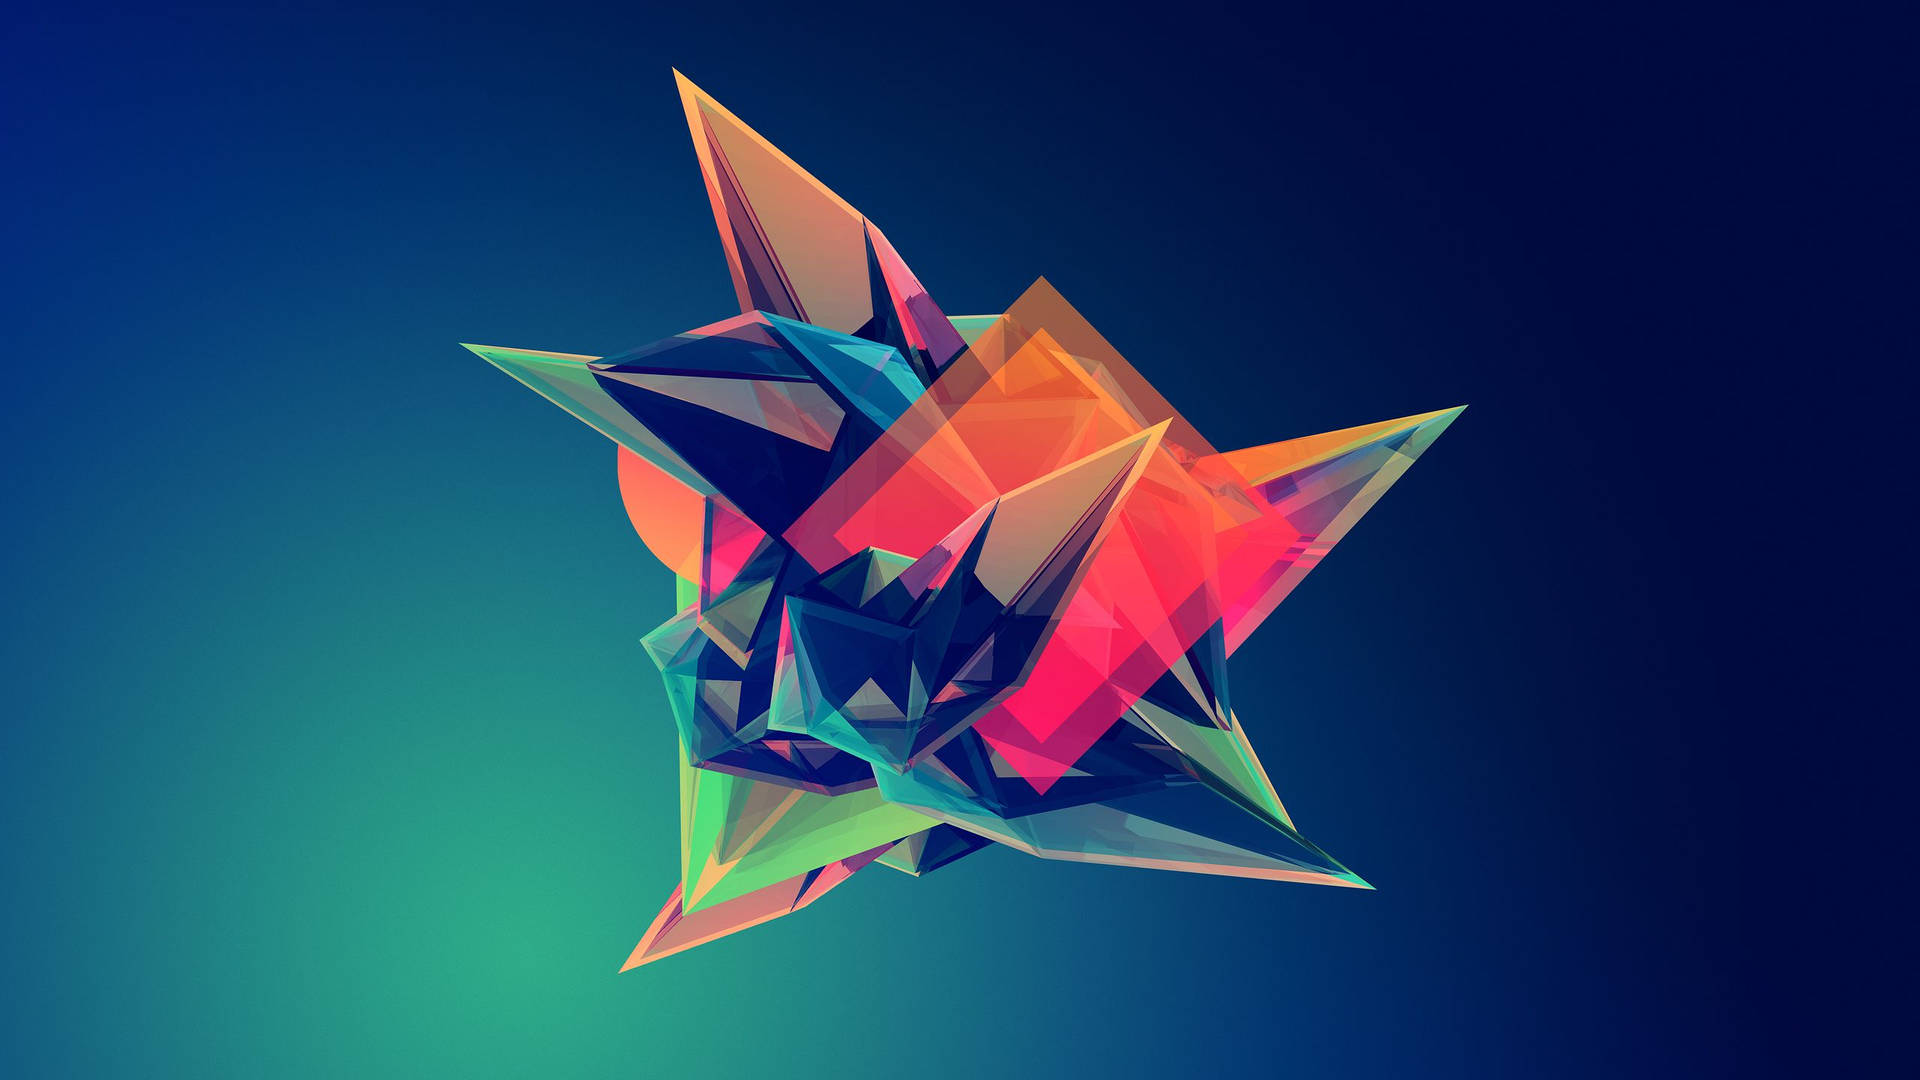 Awesome Geometric Shapes Origami Background